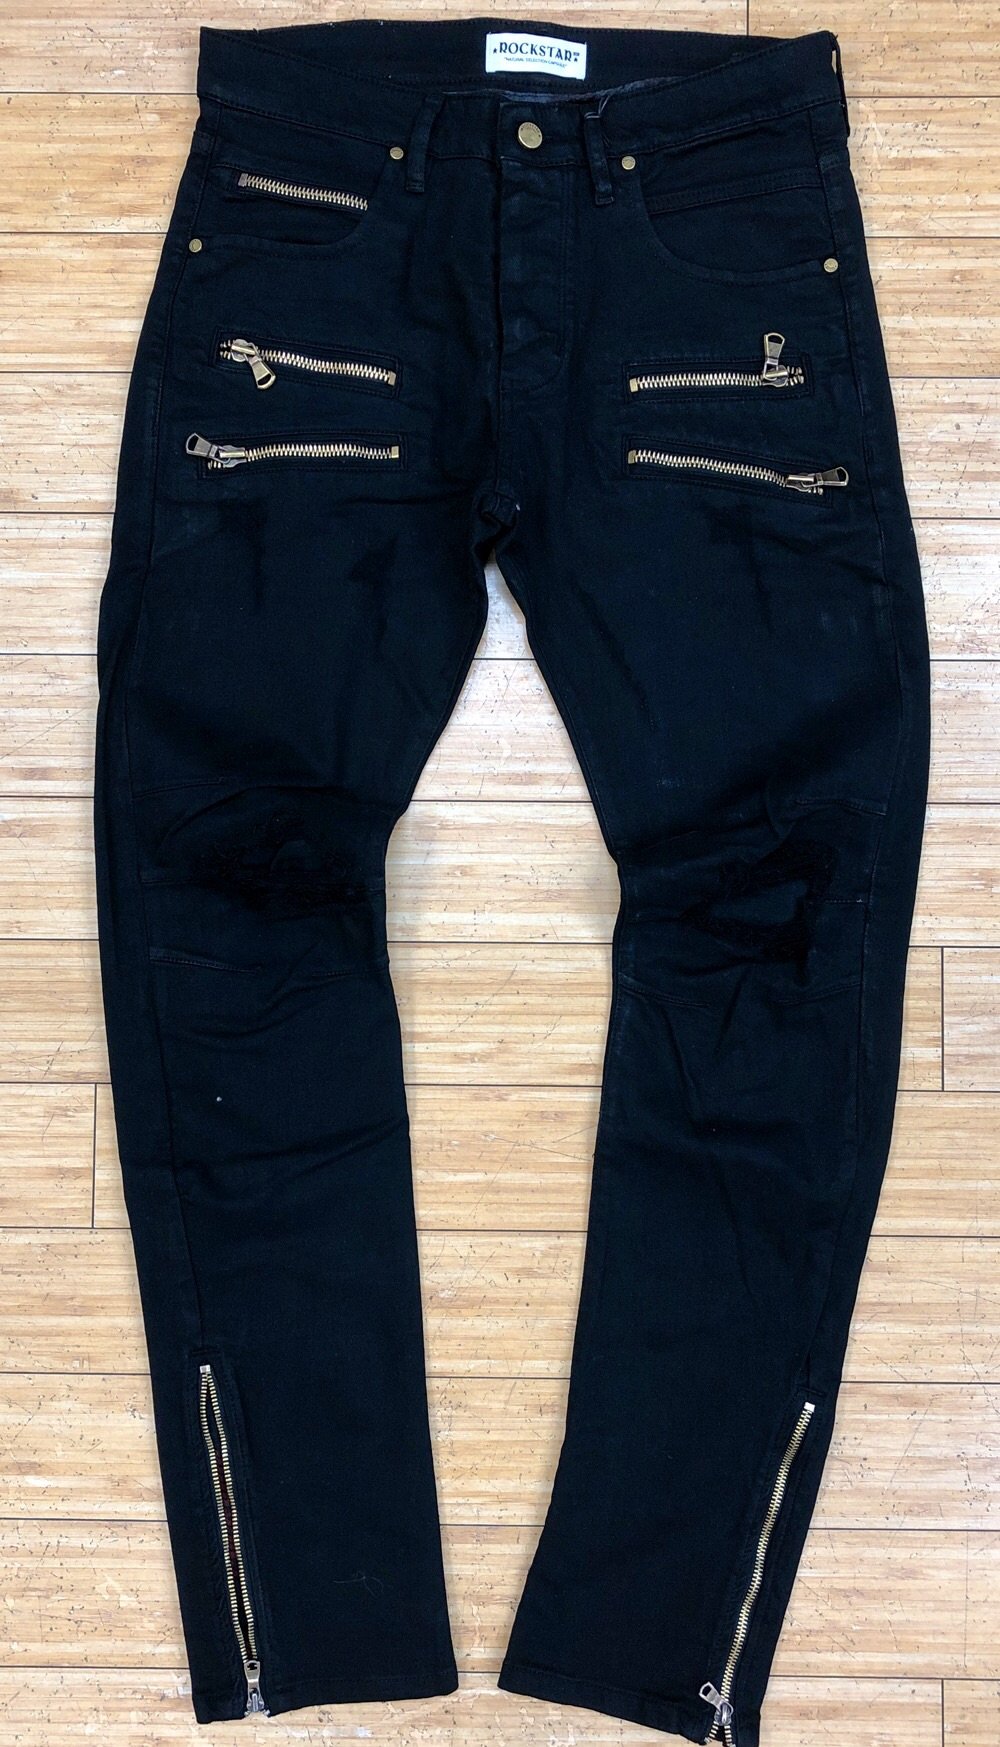 Rockstar- Yamato (black) jeans